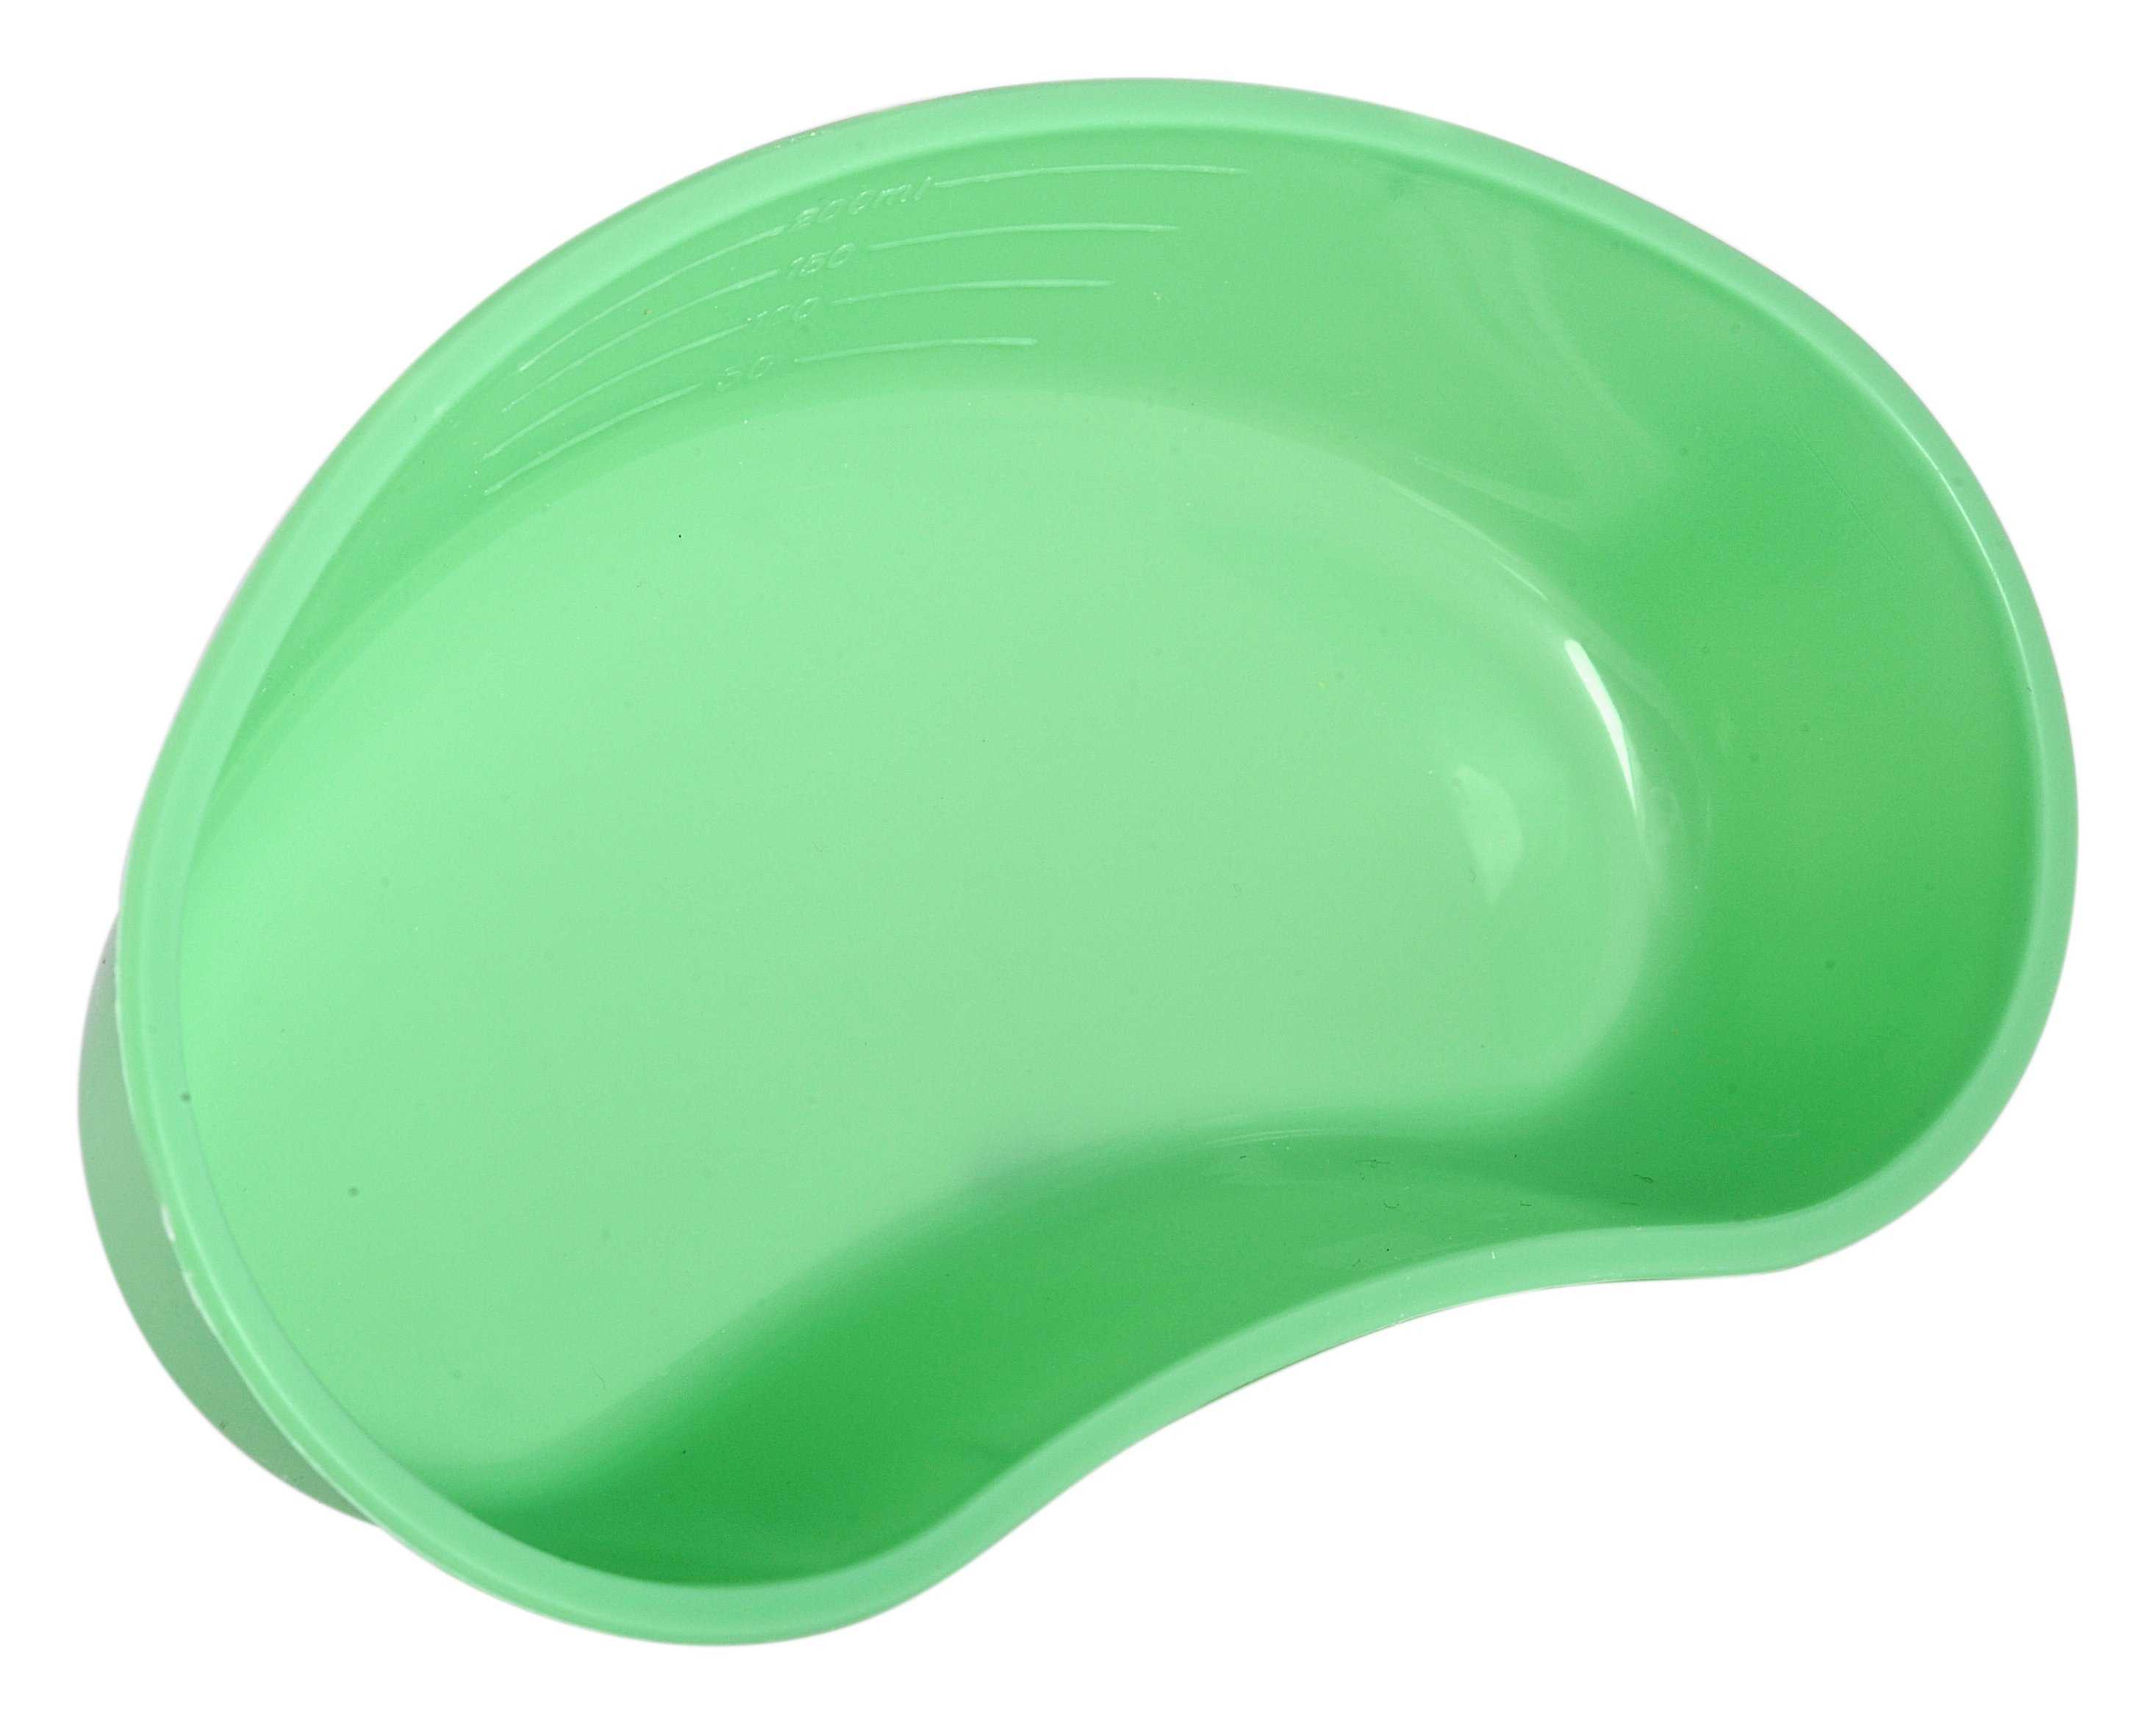 Kidney Dish - Plastic | Allure Professional Products